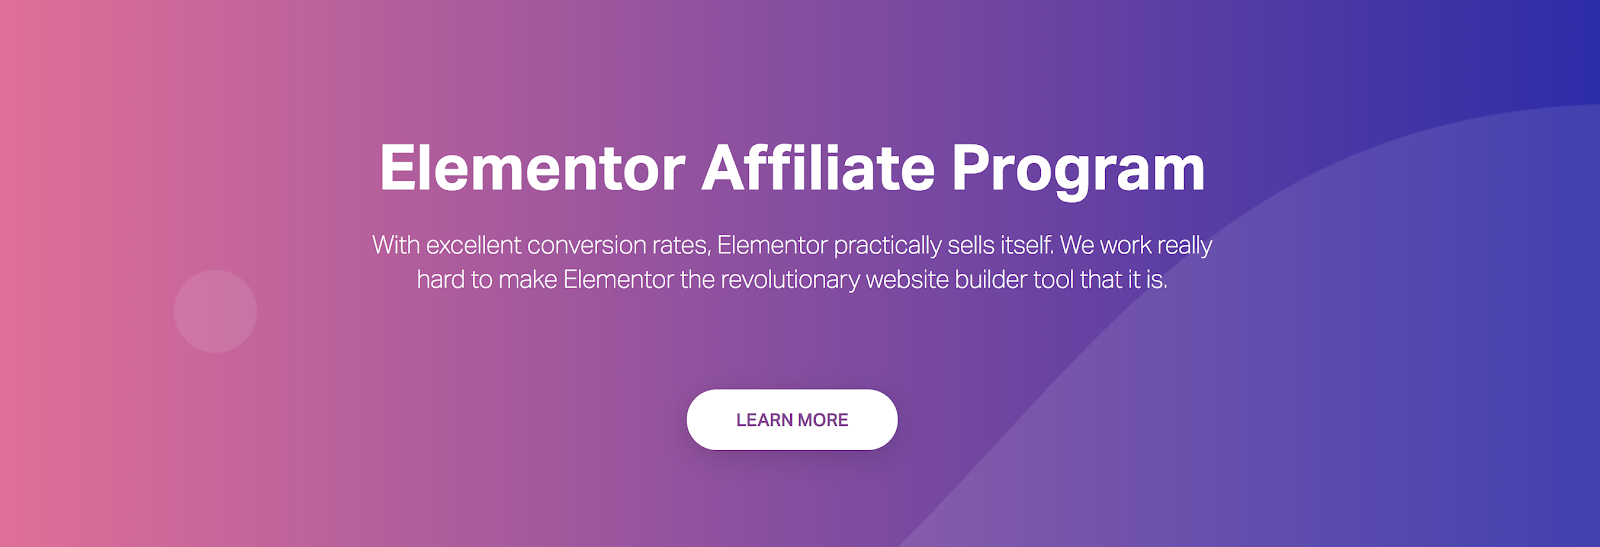 Elementor WordPress Theme Affiliate Program Page Screenshot